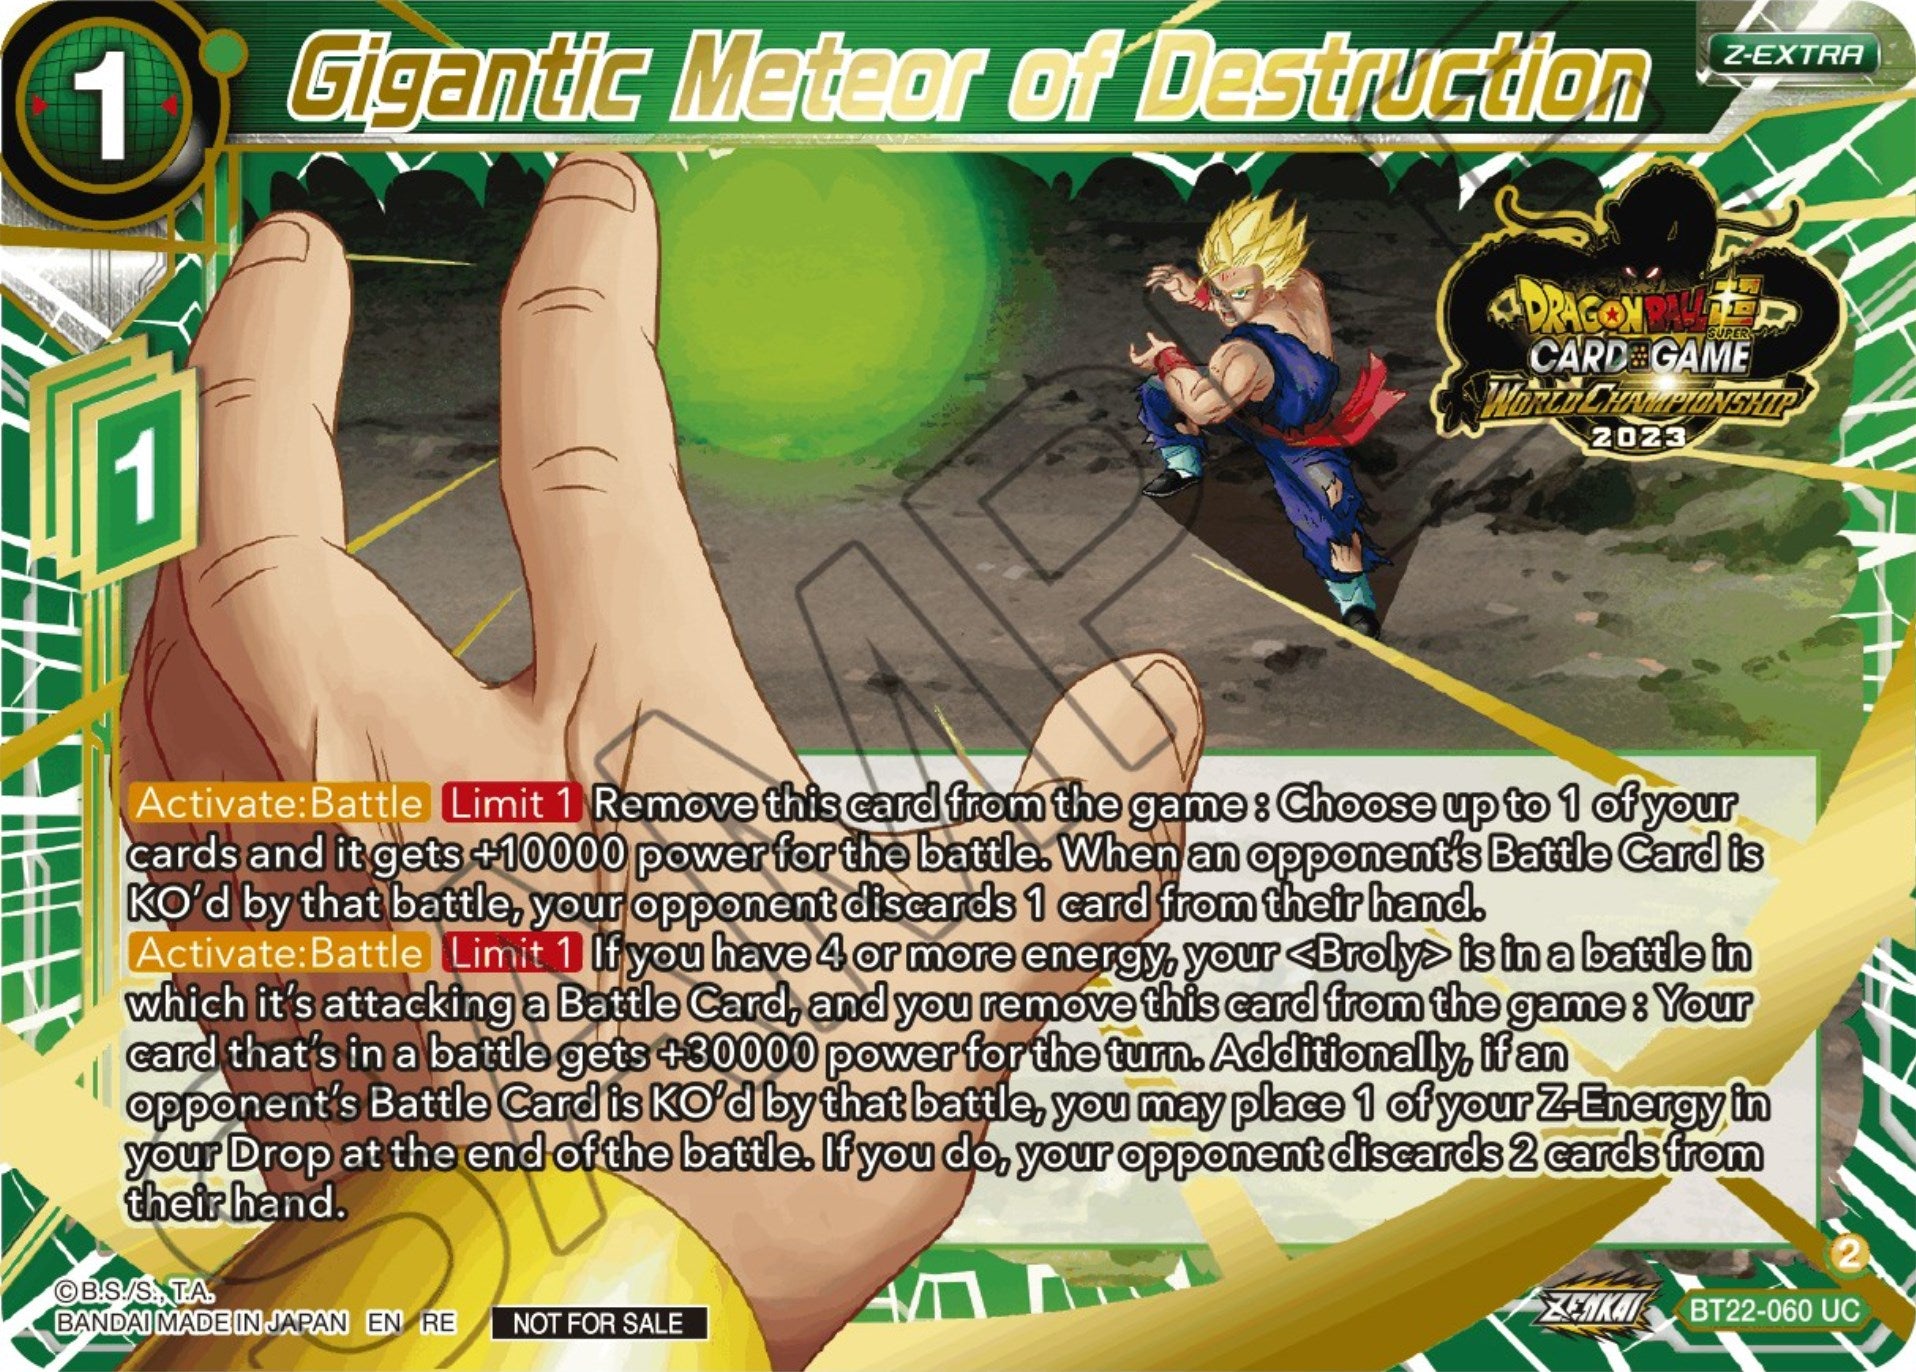 Gigantic Meteor of Destruction (2023 World Championship Z-Extra Card Set) (BT22-060) [Tournament Promotion Cards] | Sanctuary Gaming